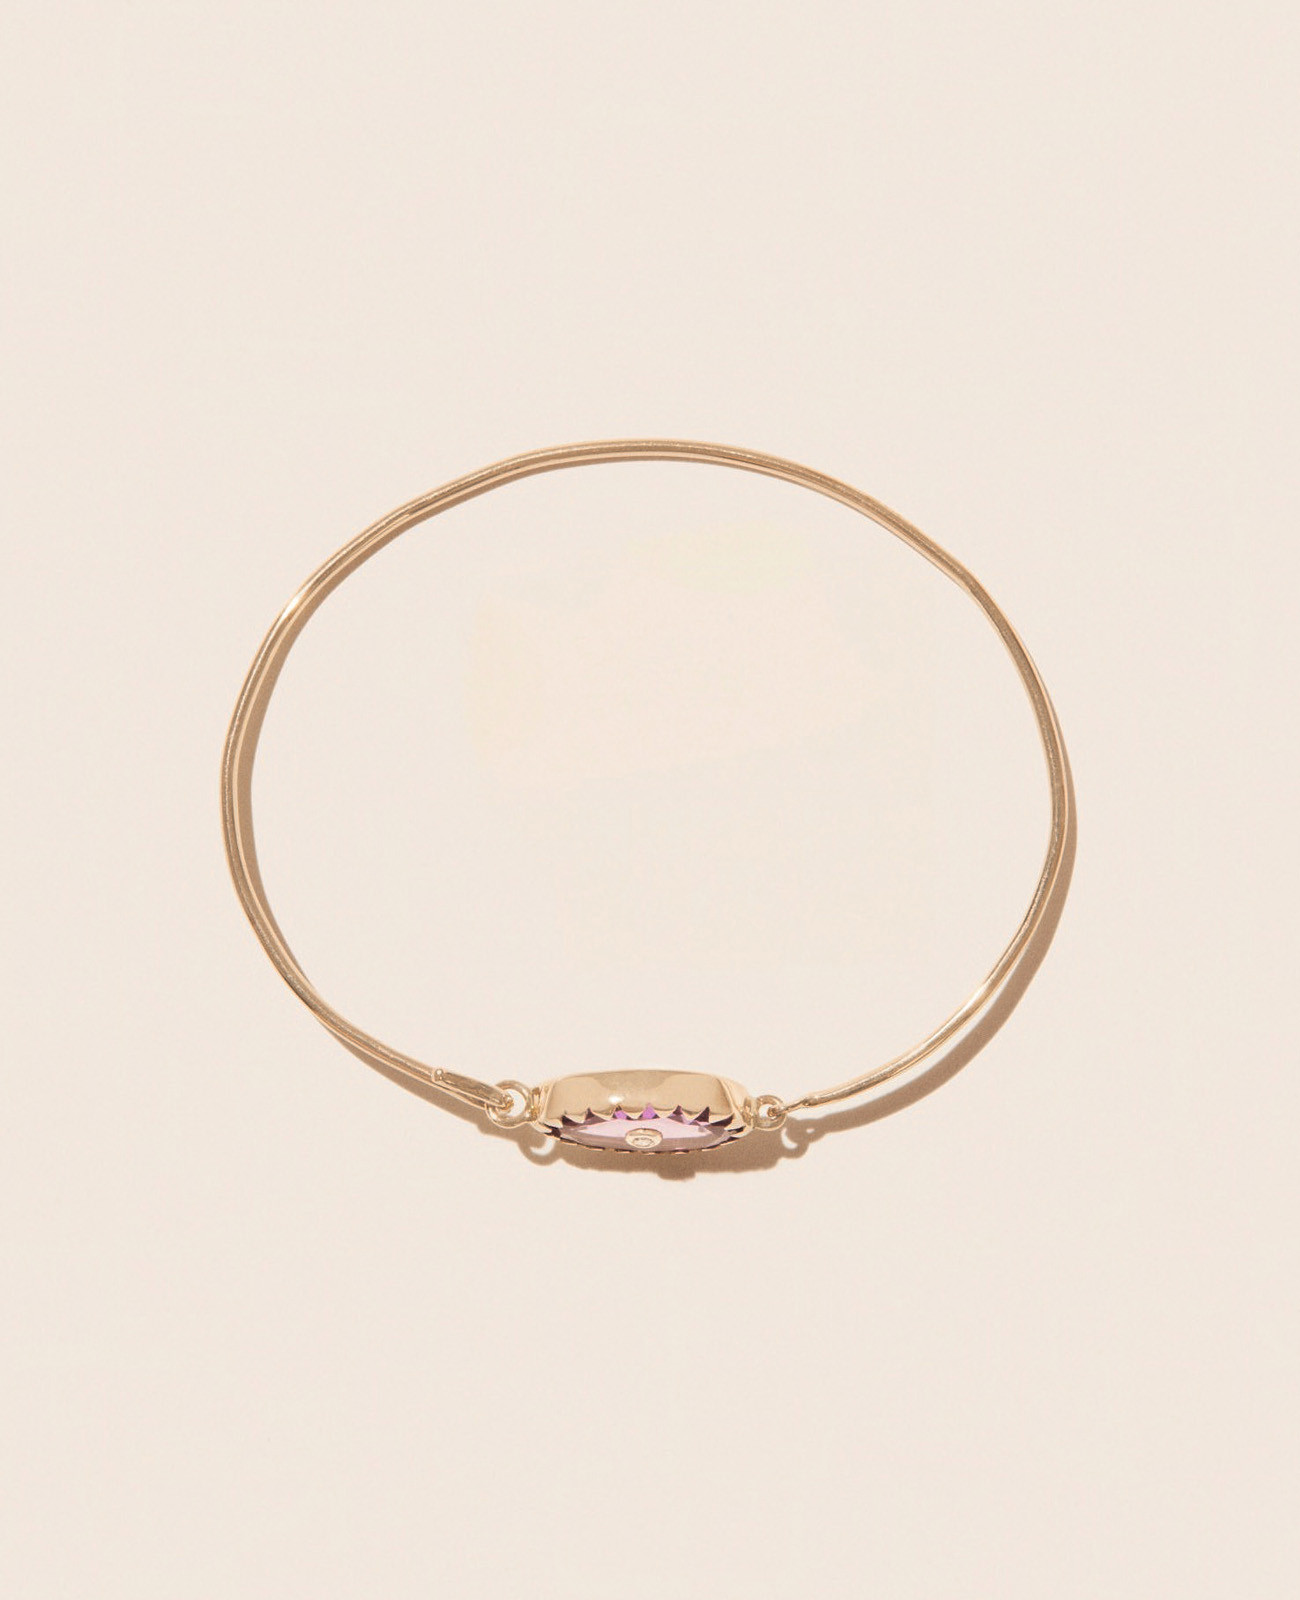 ORSO PURPLE AMETHYST bracelet pascale monvoisin jewelry paris